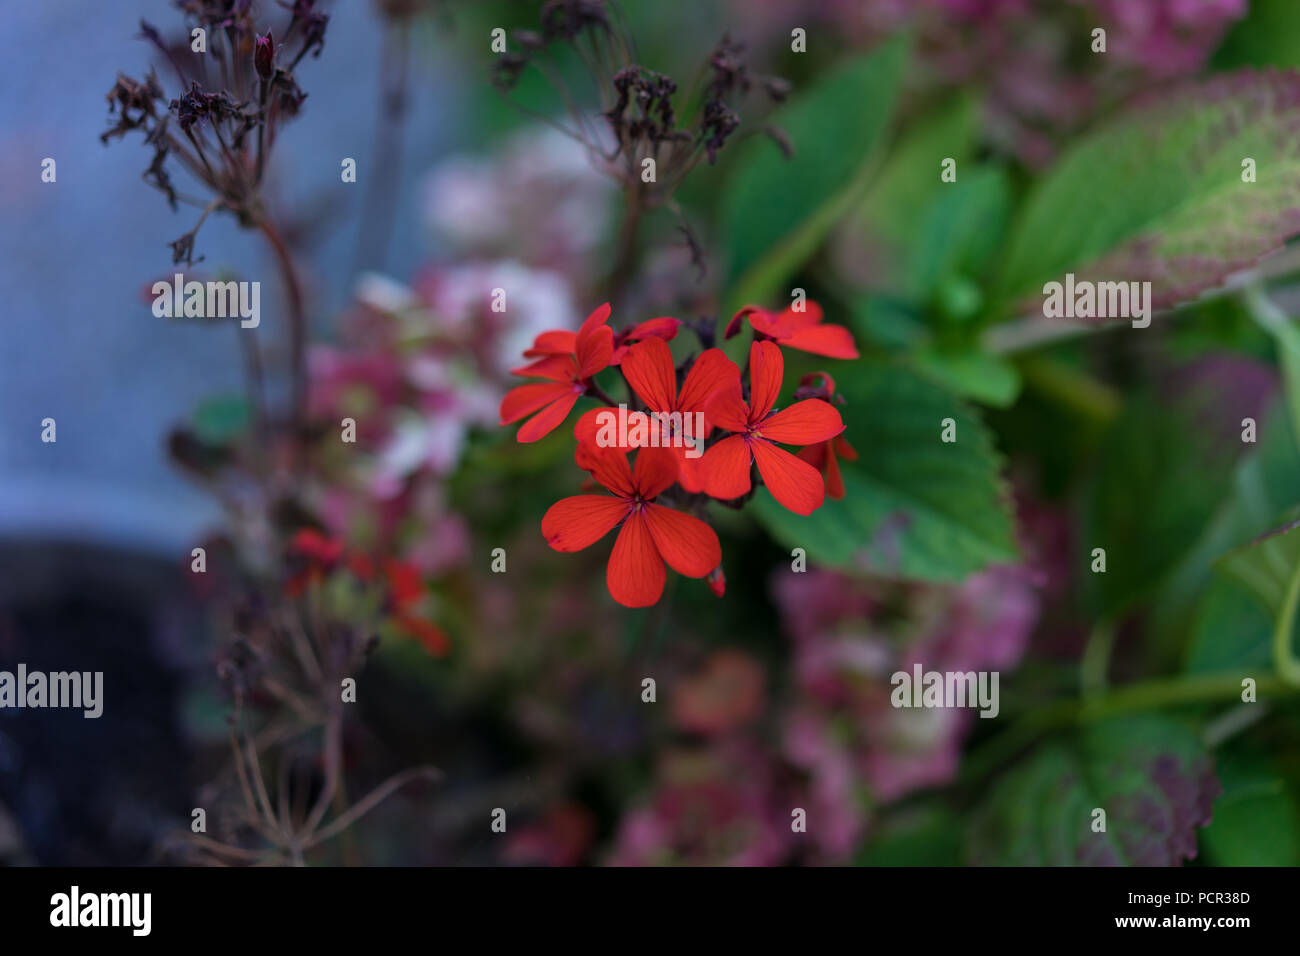 filigran small red flower bloomin in garden bokeh Stock Photo